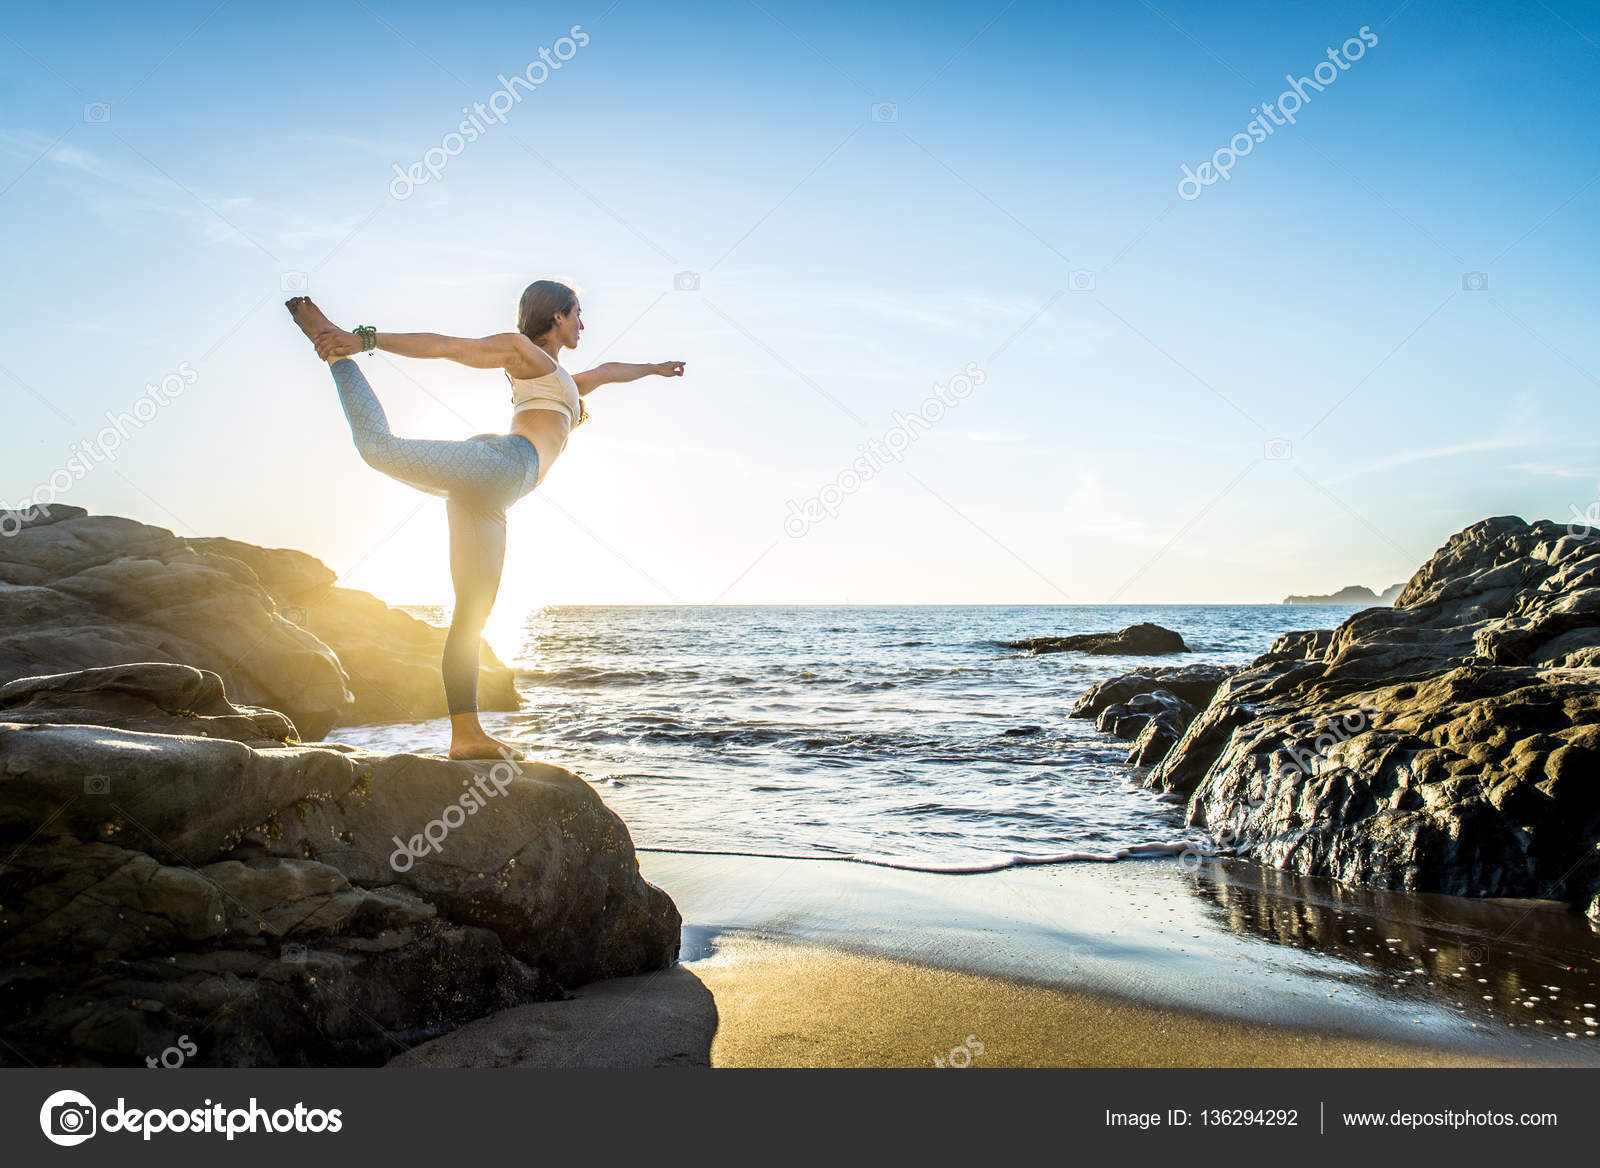 https://st3.depositphotos.com/2853475/13629/i/1600/depositphotos_136294292-stock-photo-woman-practicing-yoga-on-beach.jpg